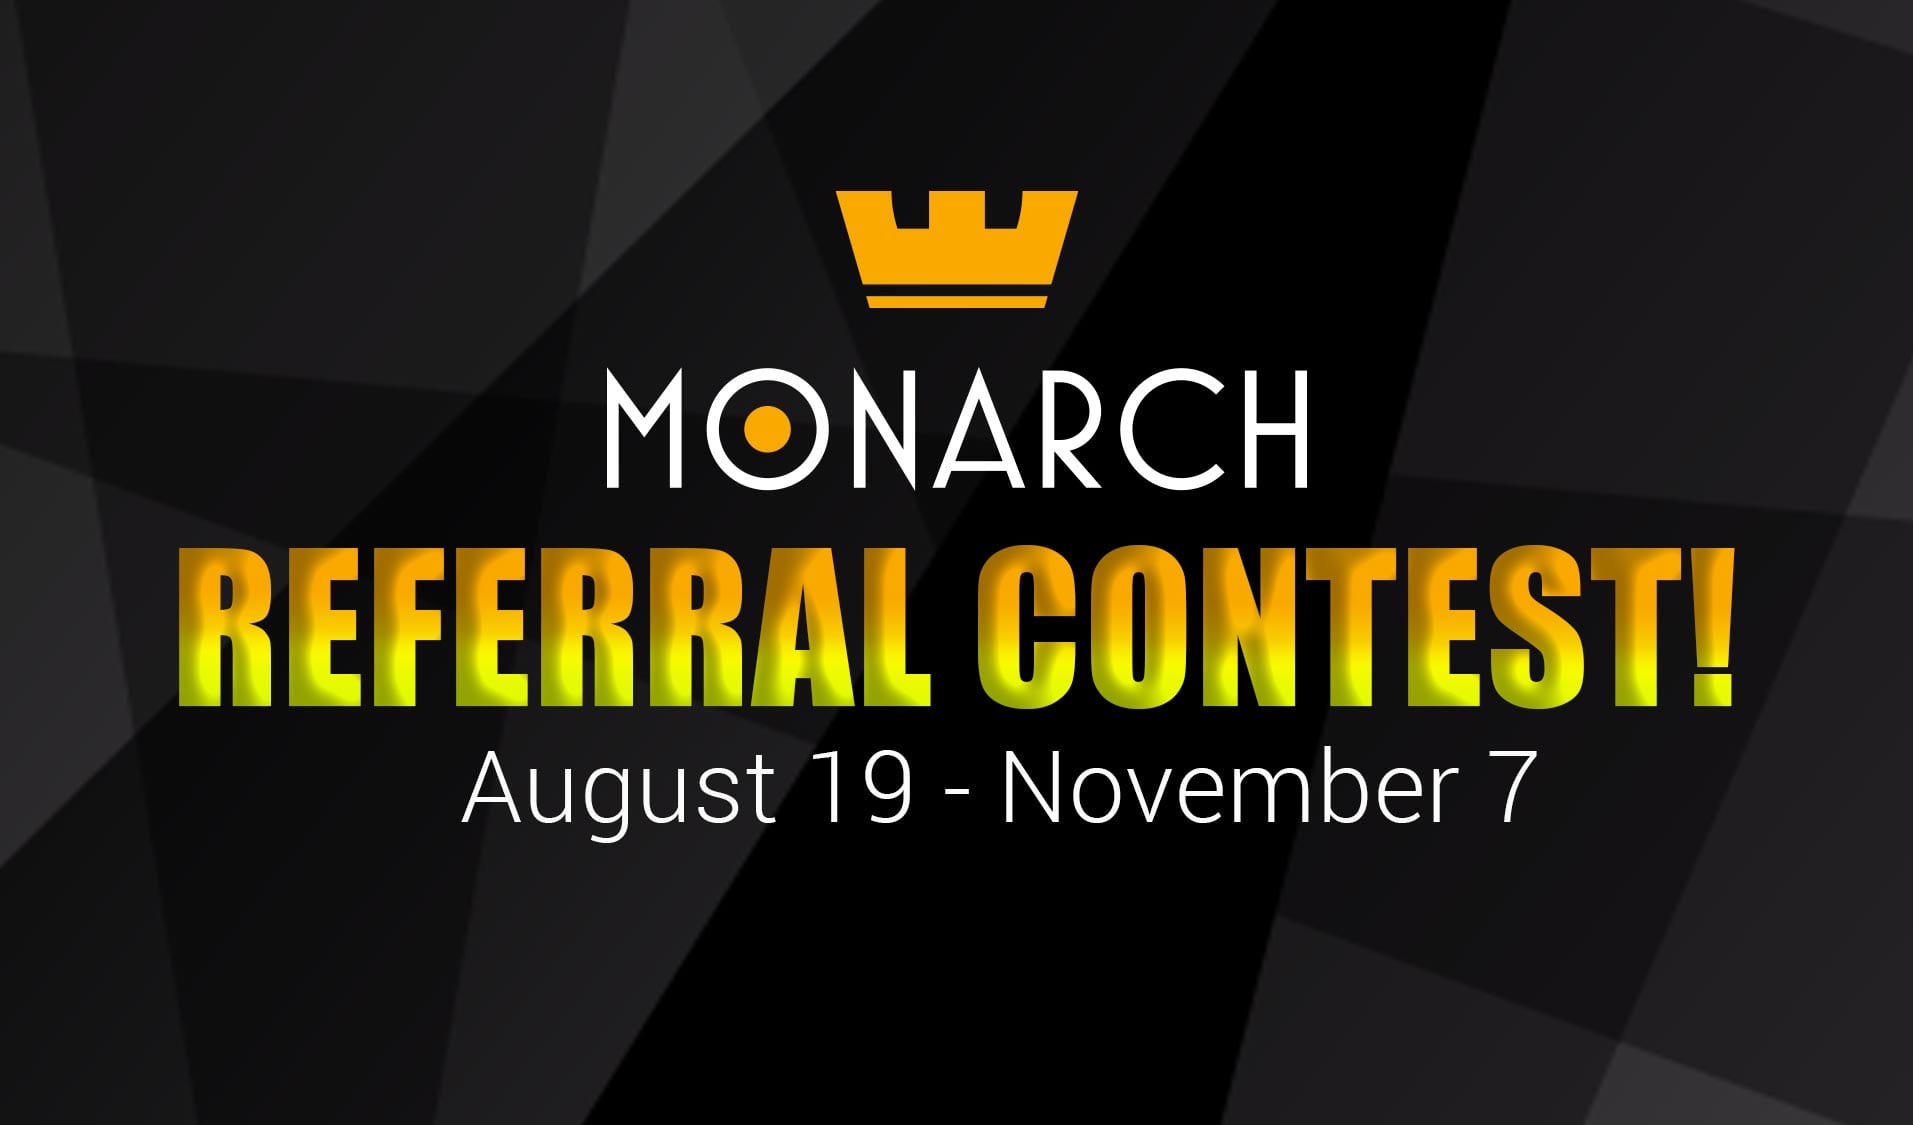 Monarch: New Referal Contest Announced!